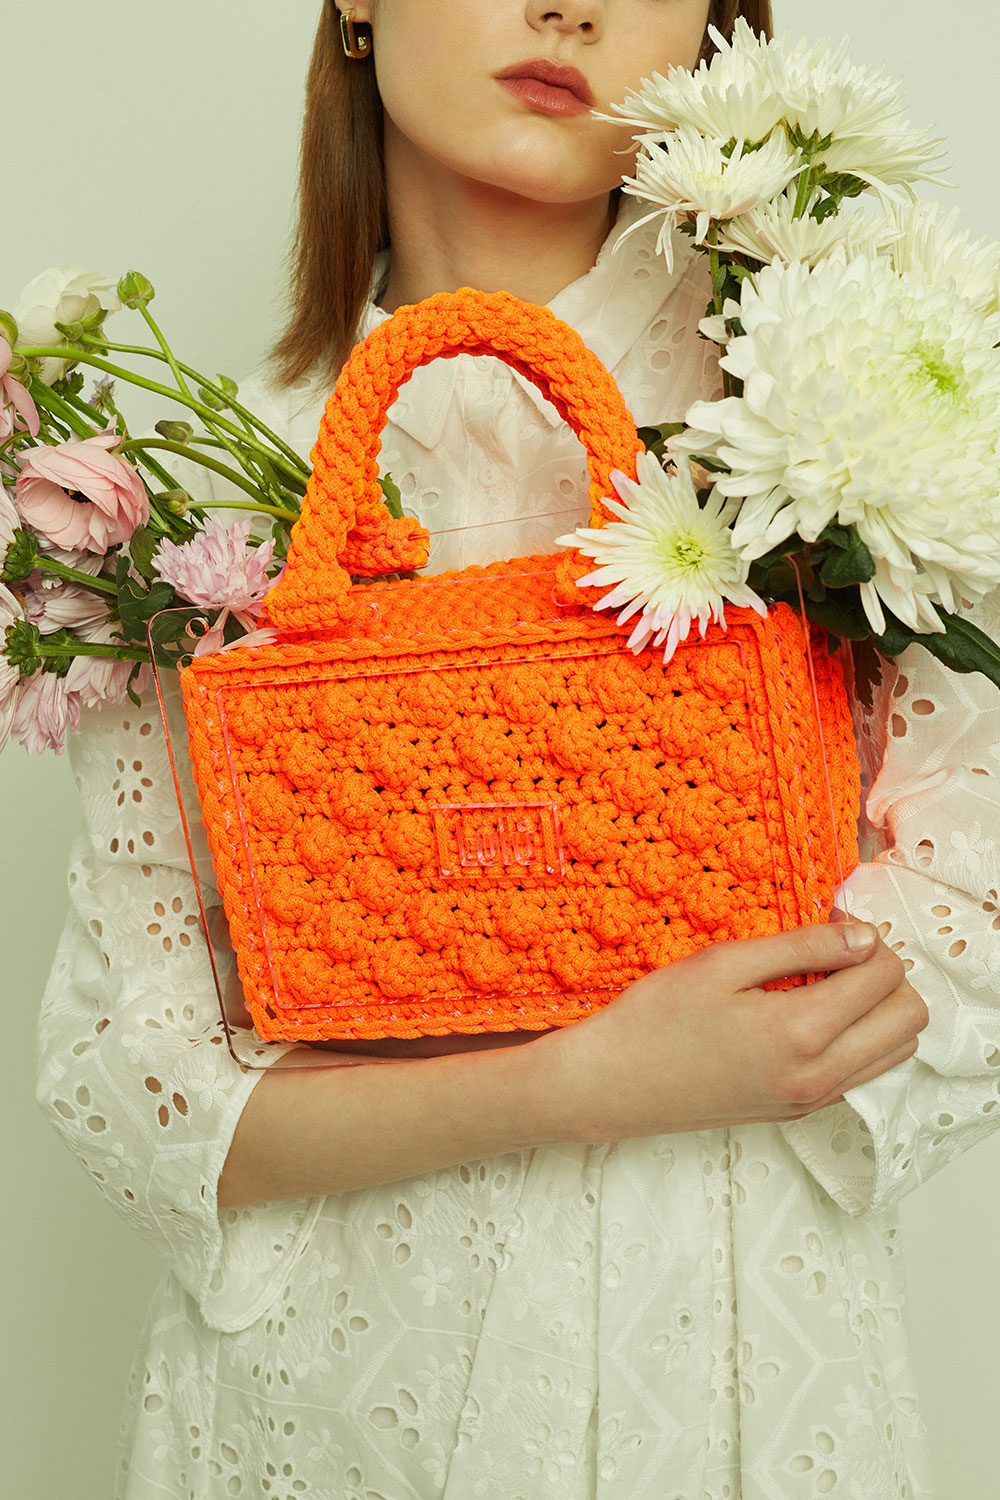 500 P/L Plexiglass Bag in orange